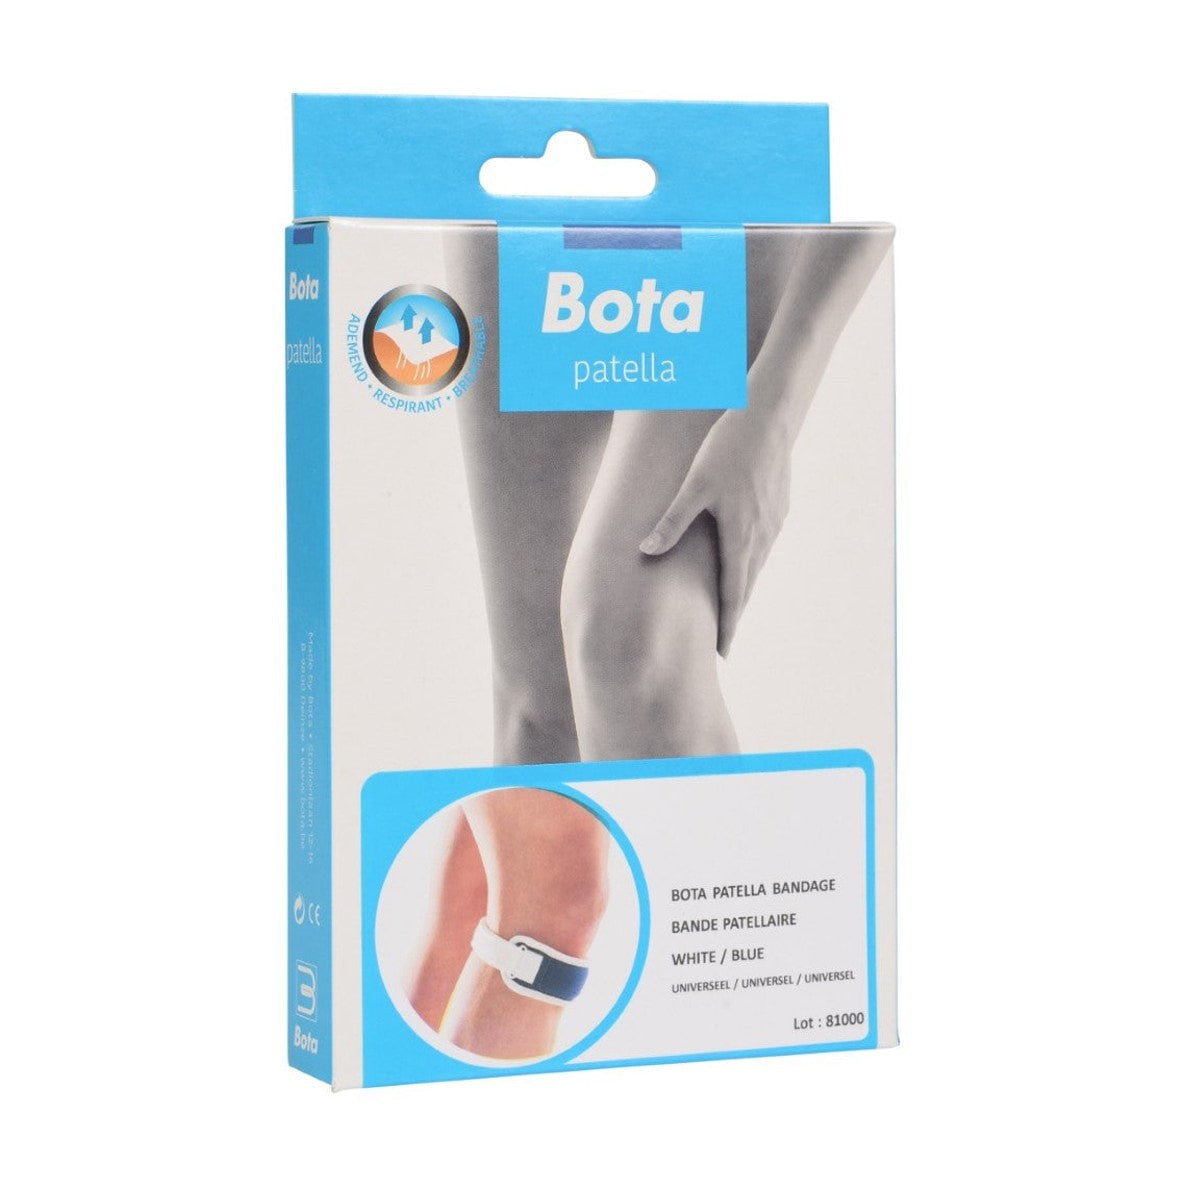 Bota patella bandage sport - (white and blue).